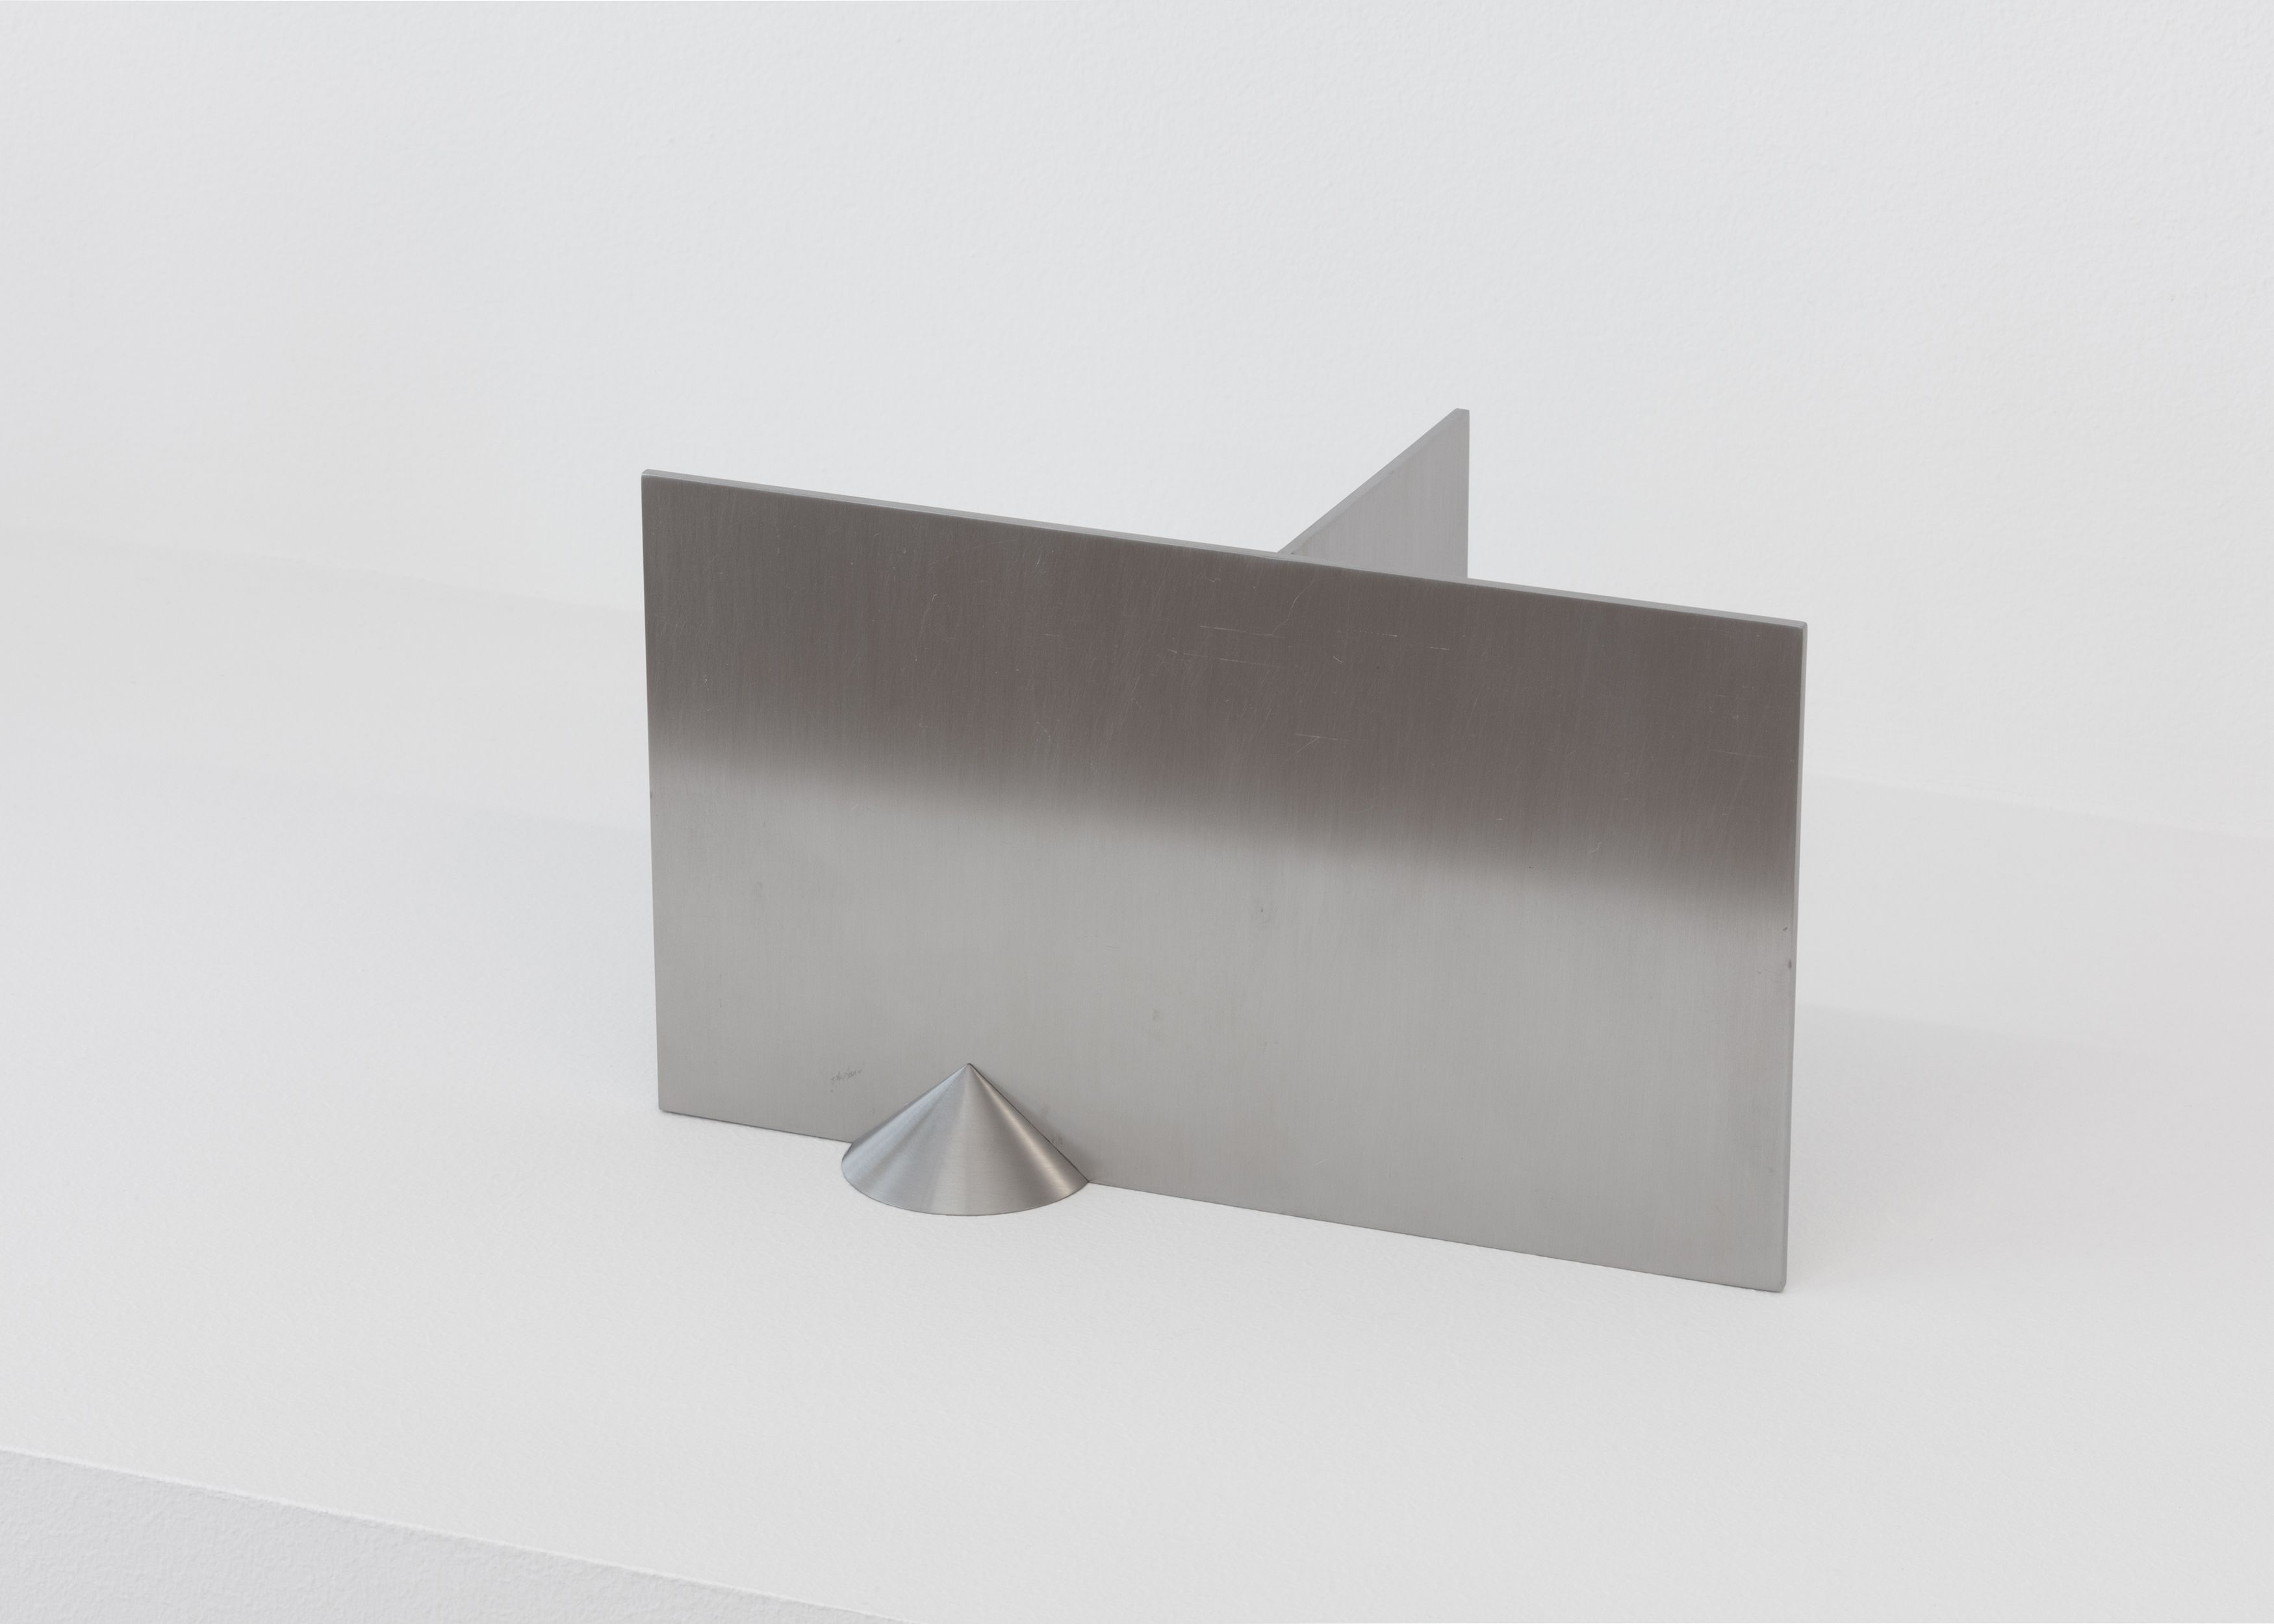 Stephen Lichty, Form 9, 2021, stainless steel, 4 x 7 x 3 3/4 in. (10.16 x 17.78 x 9.53 cm)